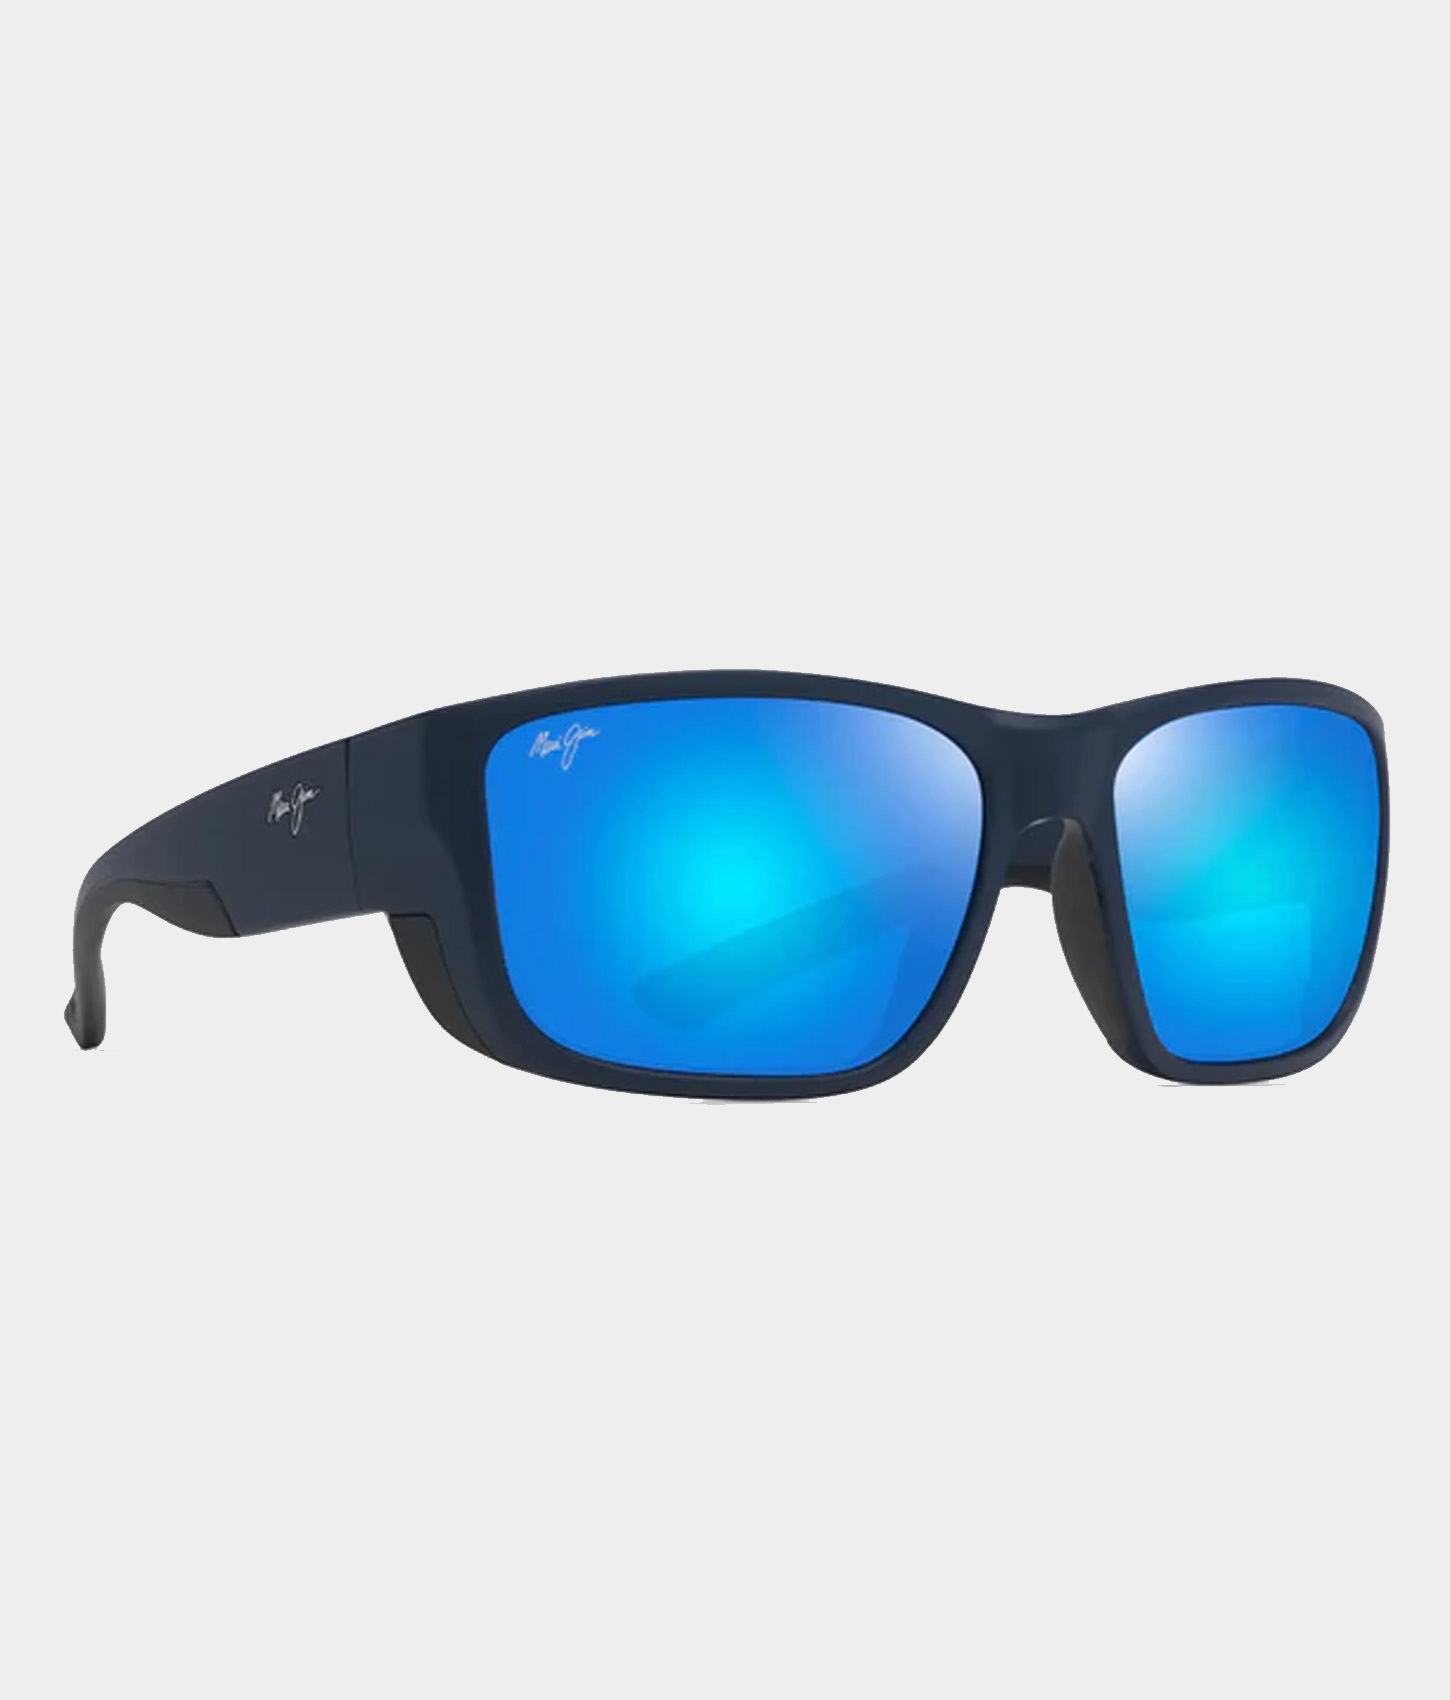 Amberjack 896 Polarized Sunglasses